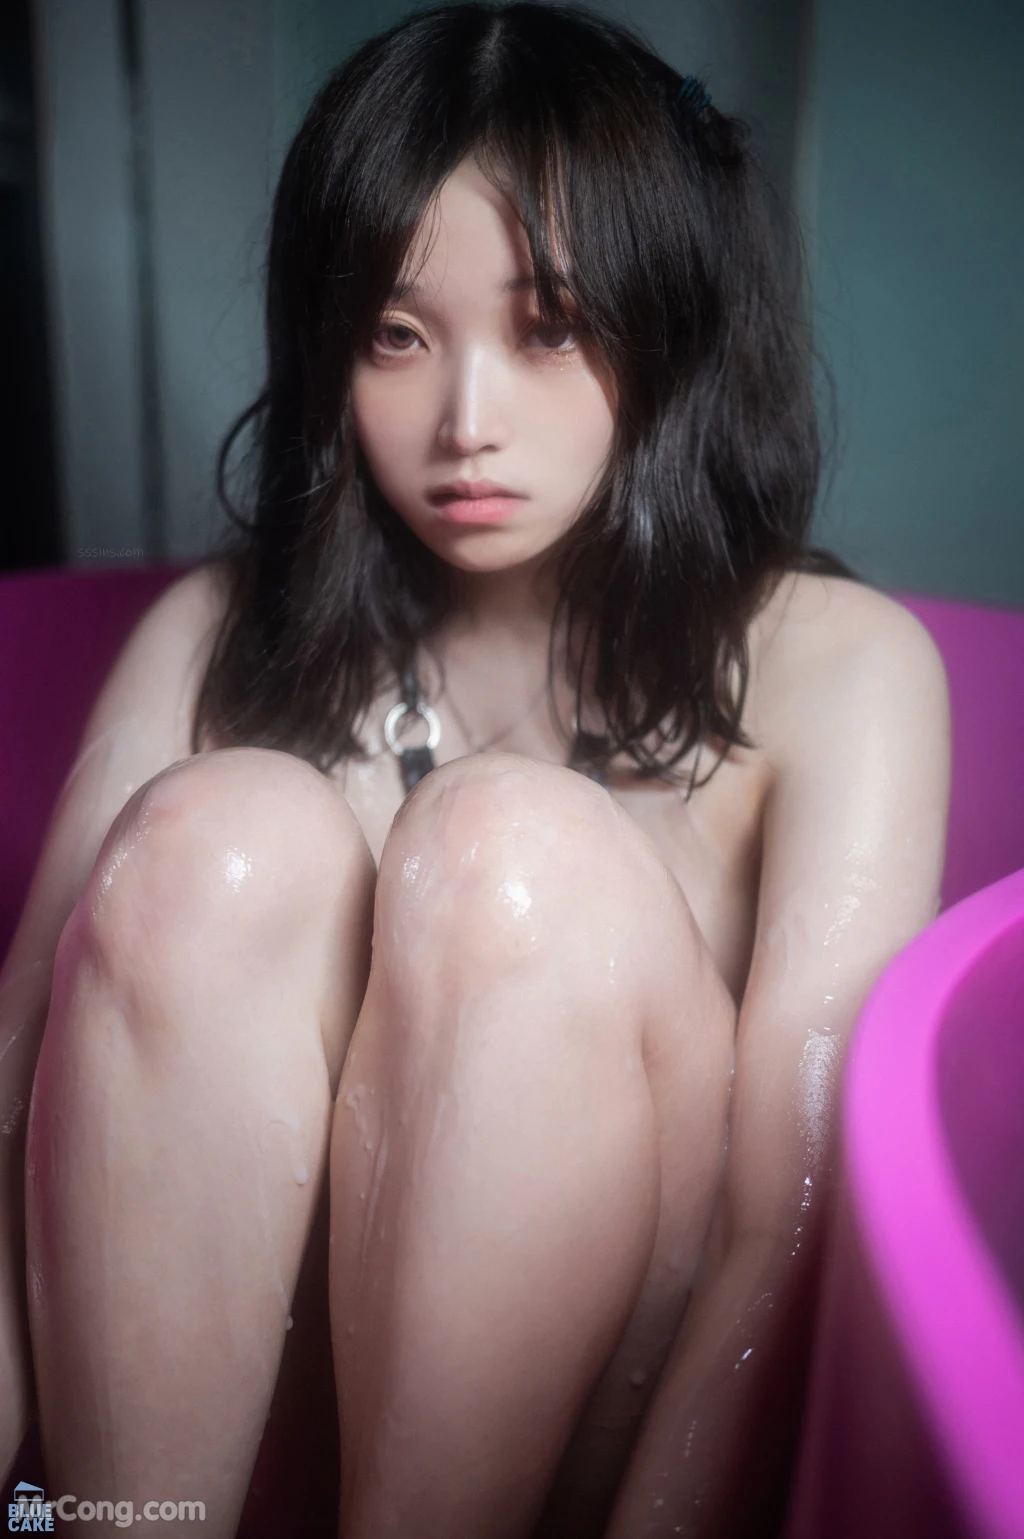 [BLUECAKE] Bambi (밤비): Vol 16 Make her my slave - Rin Tohsaka (166 photos) photo 7-9